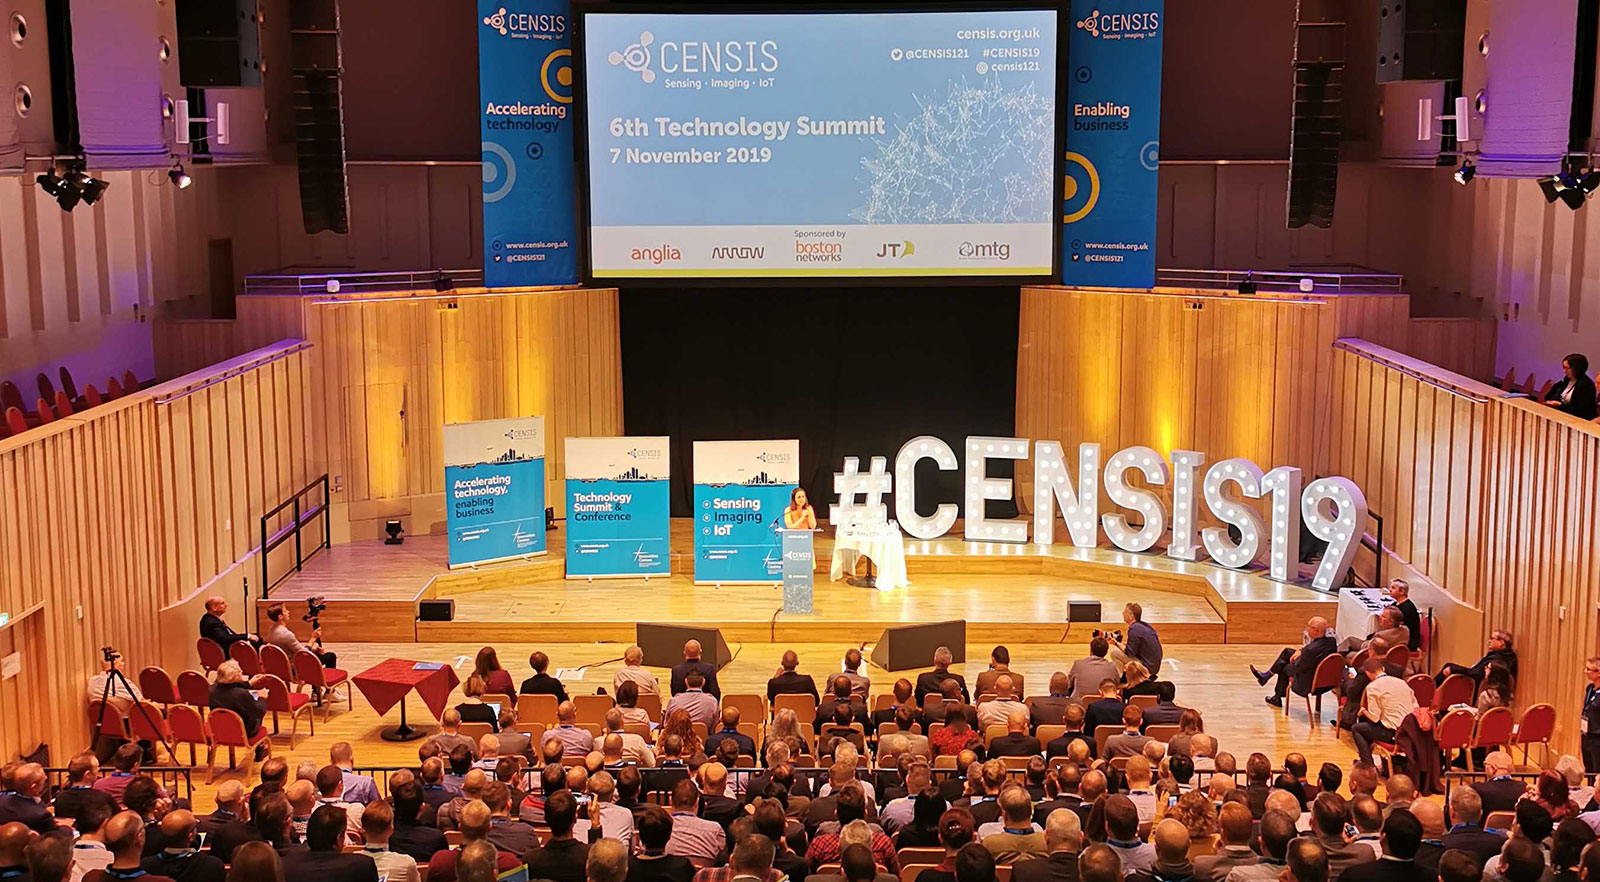 CENSIS Tech Summit 2019 - 3